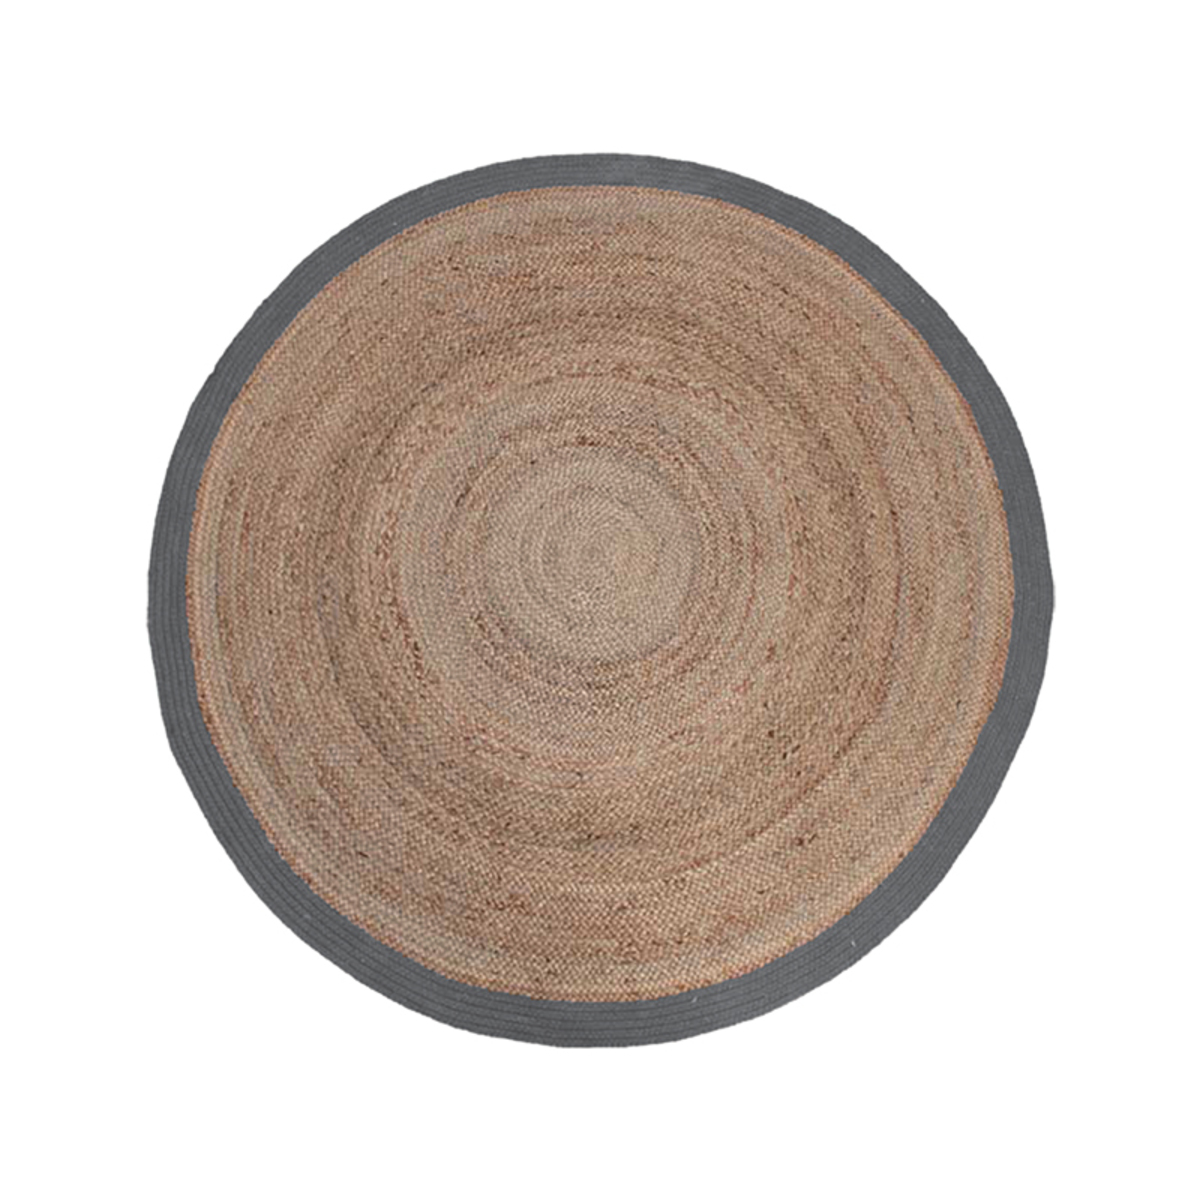 LABEL51 - Karpet Jute - diameter 150 cm - Grijs